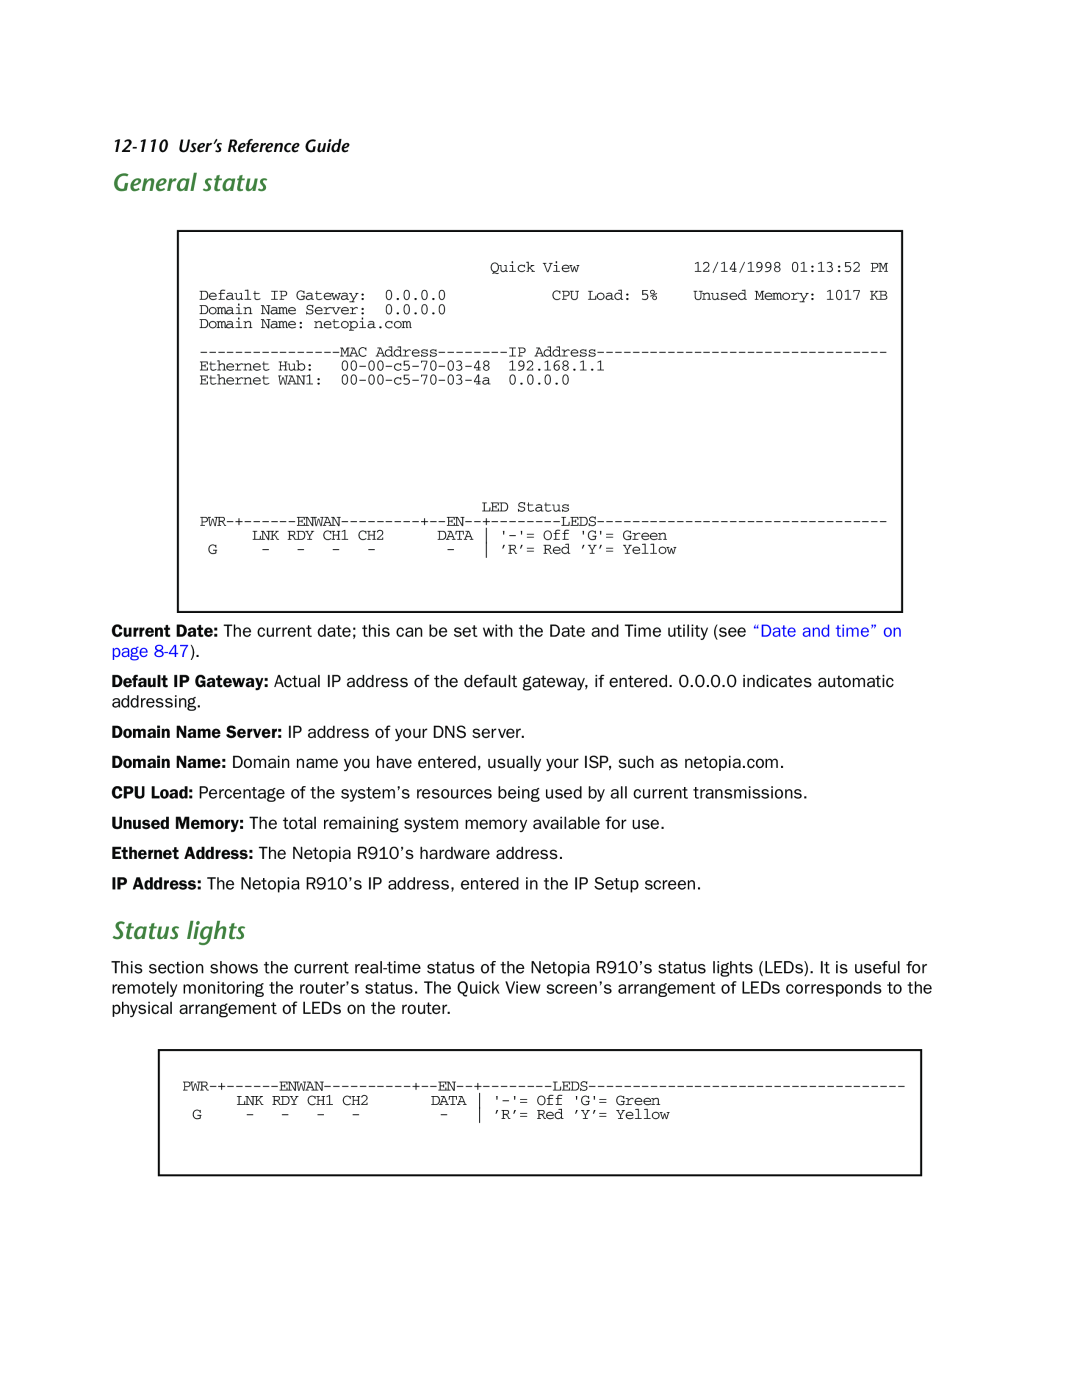 Netopia R910 manual General status, Status lights, User’s Reference Guide 